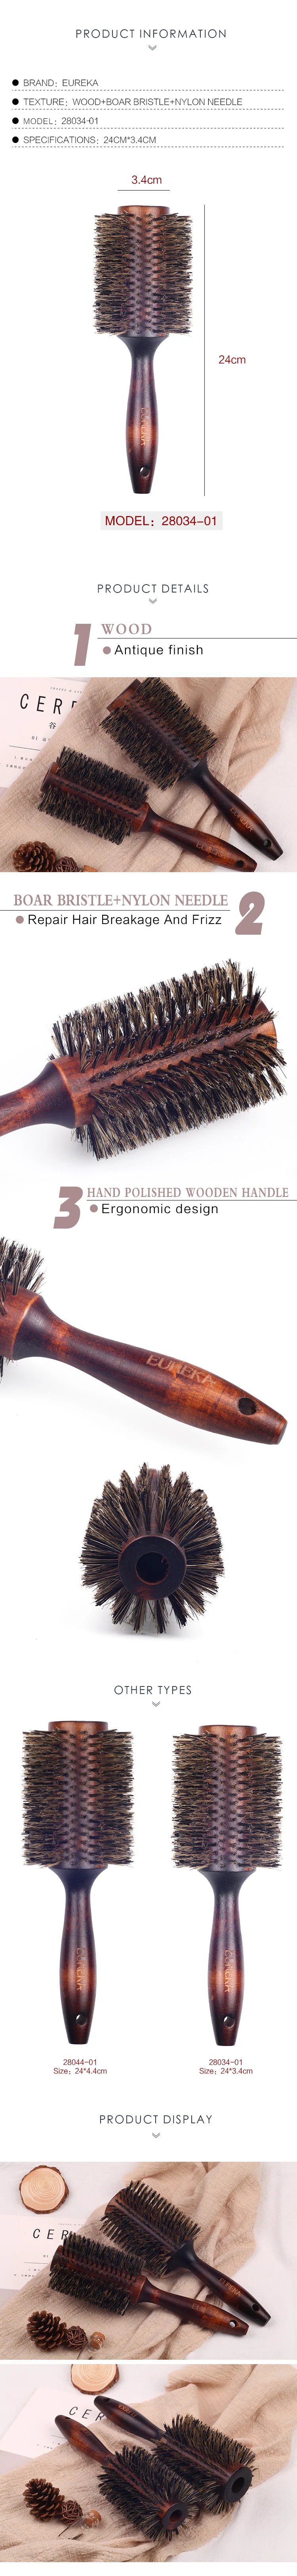 EUREKA 28034-01 Professional Boar Bristle Nylon Pins Round Brush Wooden Hair Brush